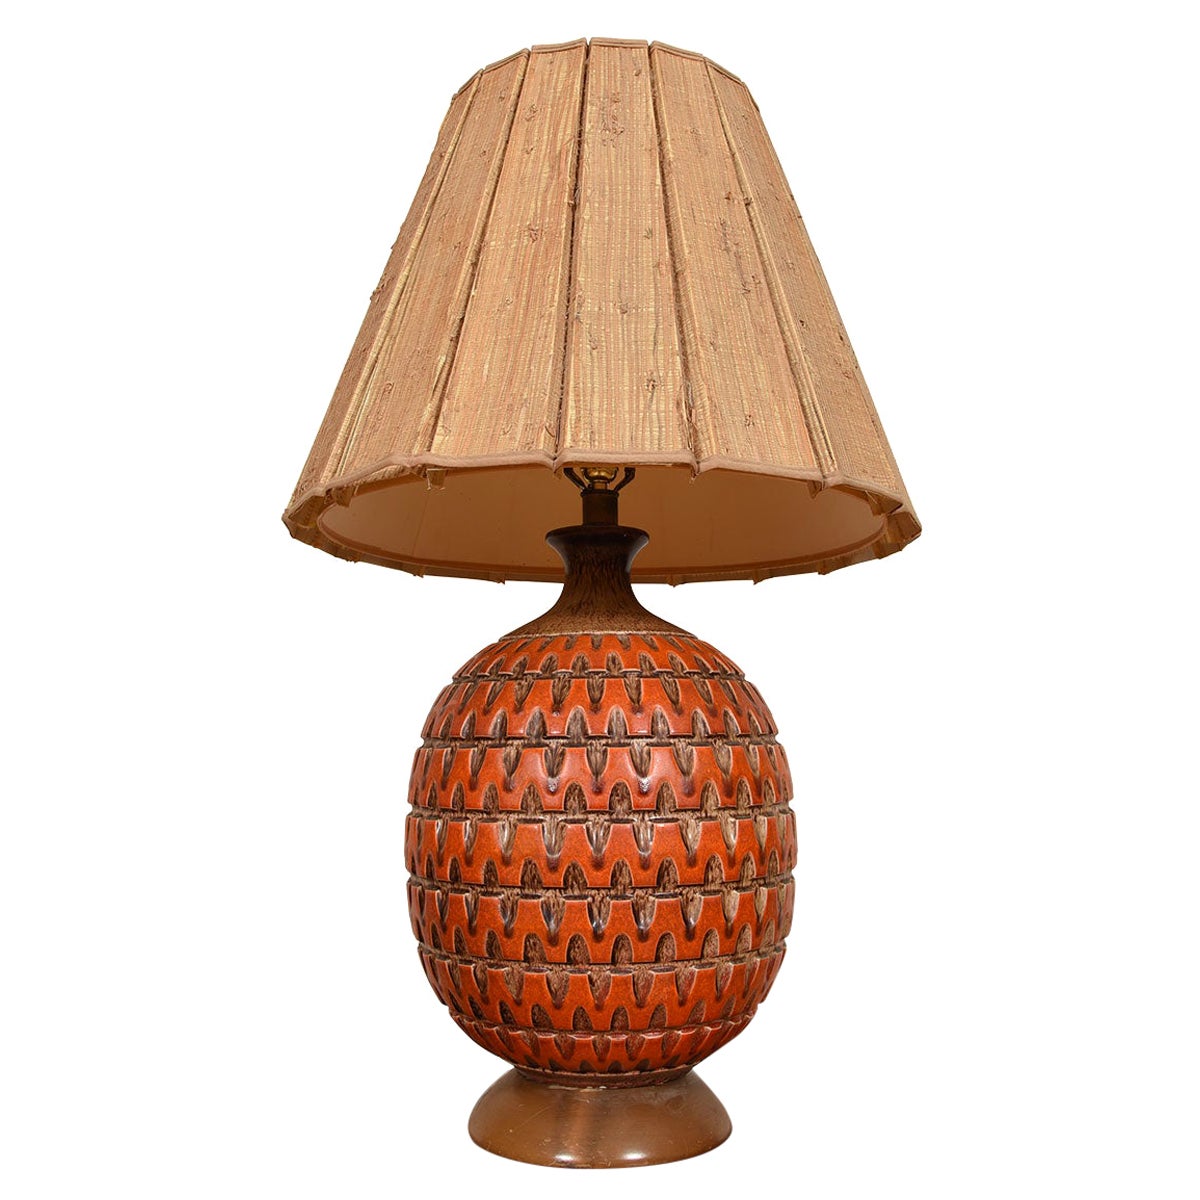 Oversized Decorator Lamp in Burnt Orange with Great Texture & Presence